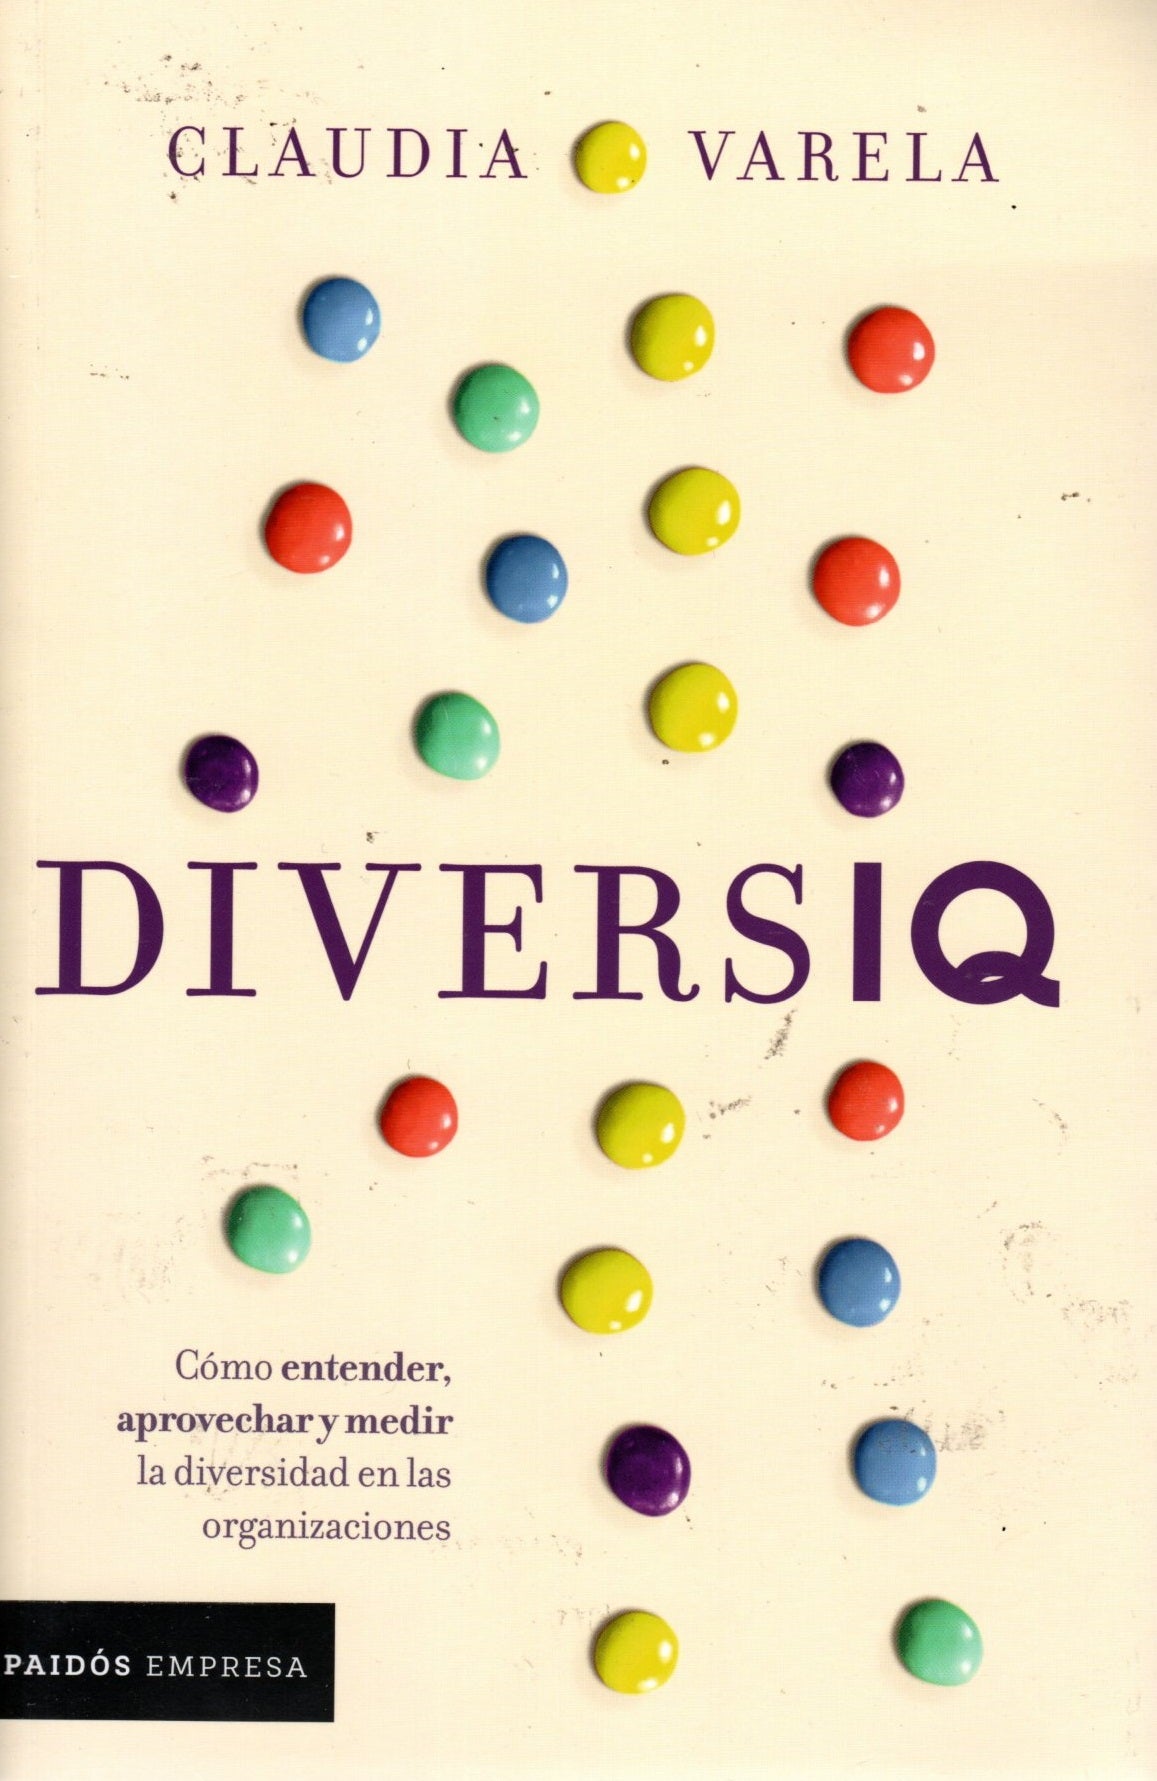 Libro Claudia Varela - DiversiQ